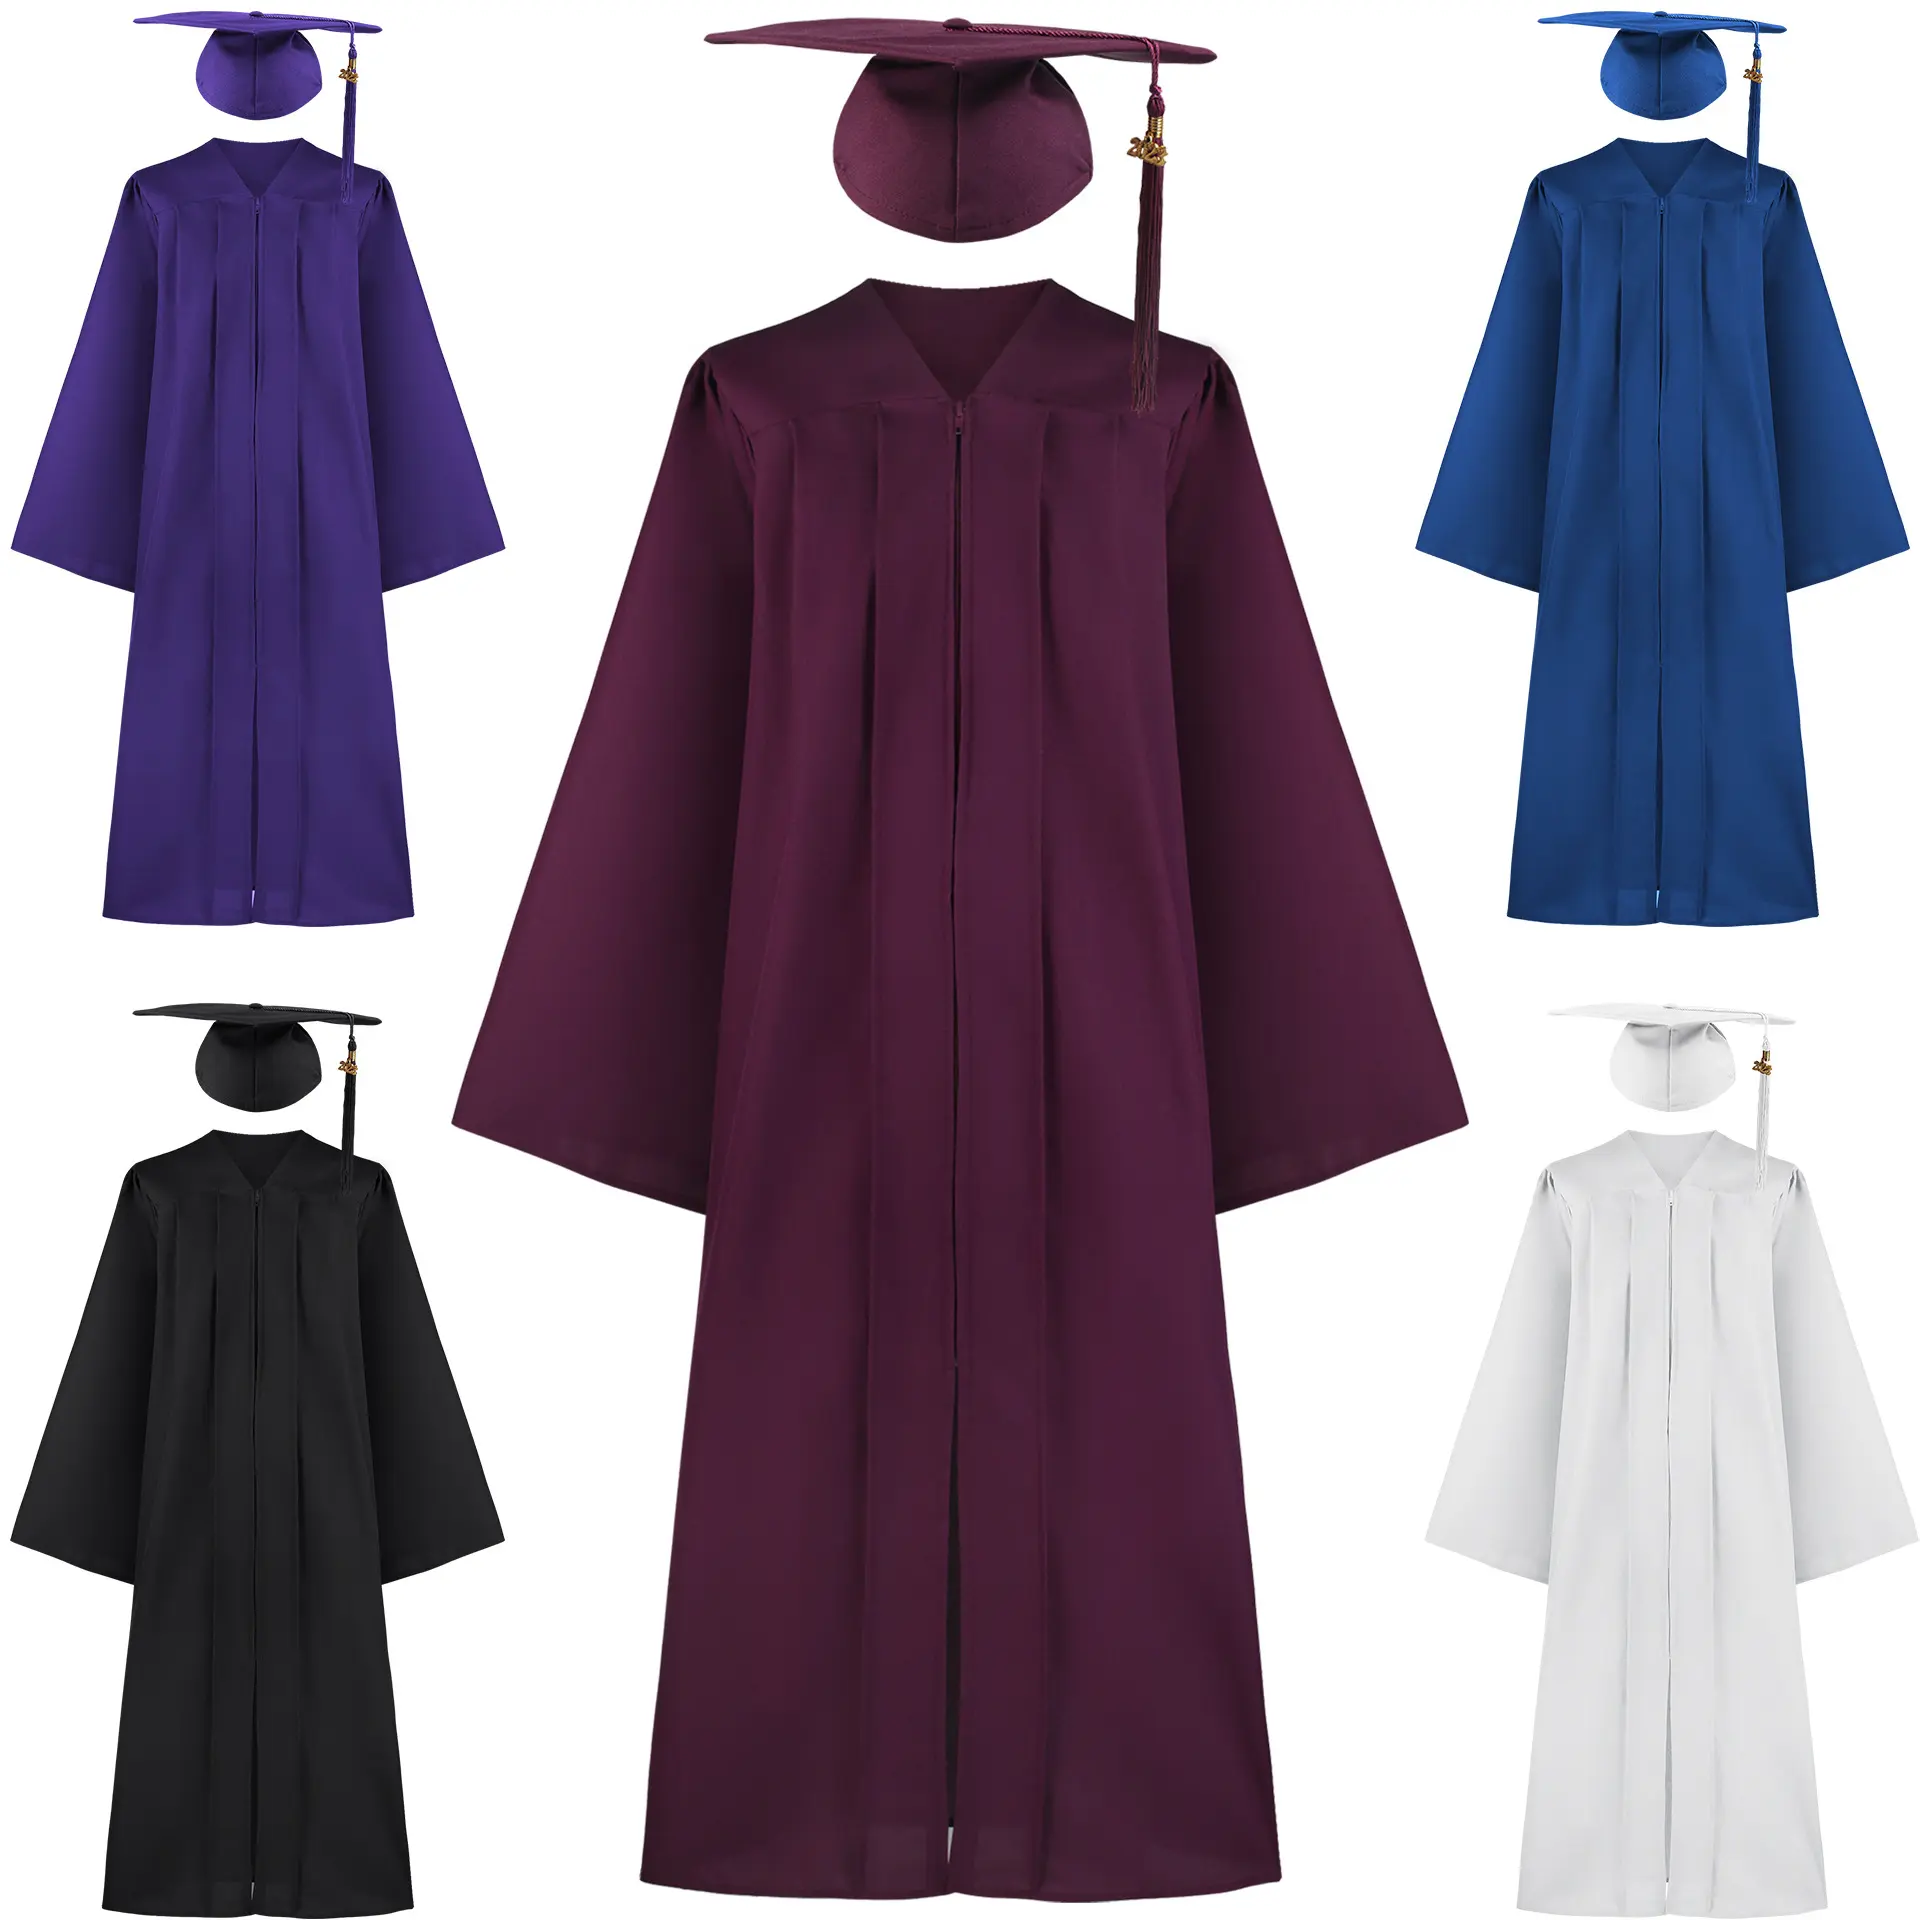 Lisans elbise yetişkin mezuniyet elbise avrupa ve amerikan lise kolej kostüm cosplay performans kostüm